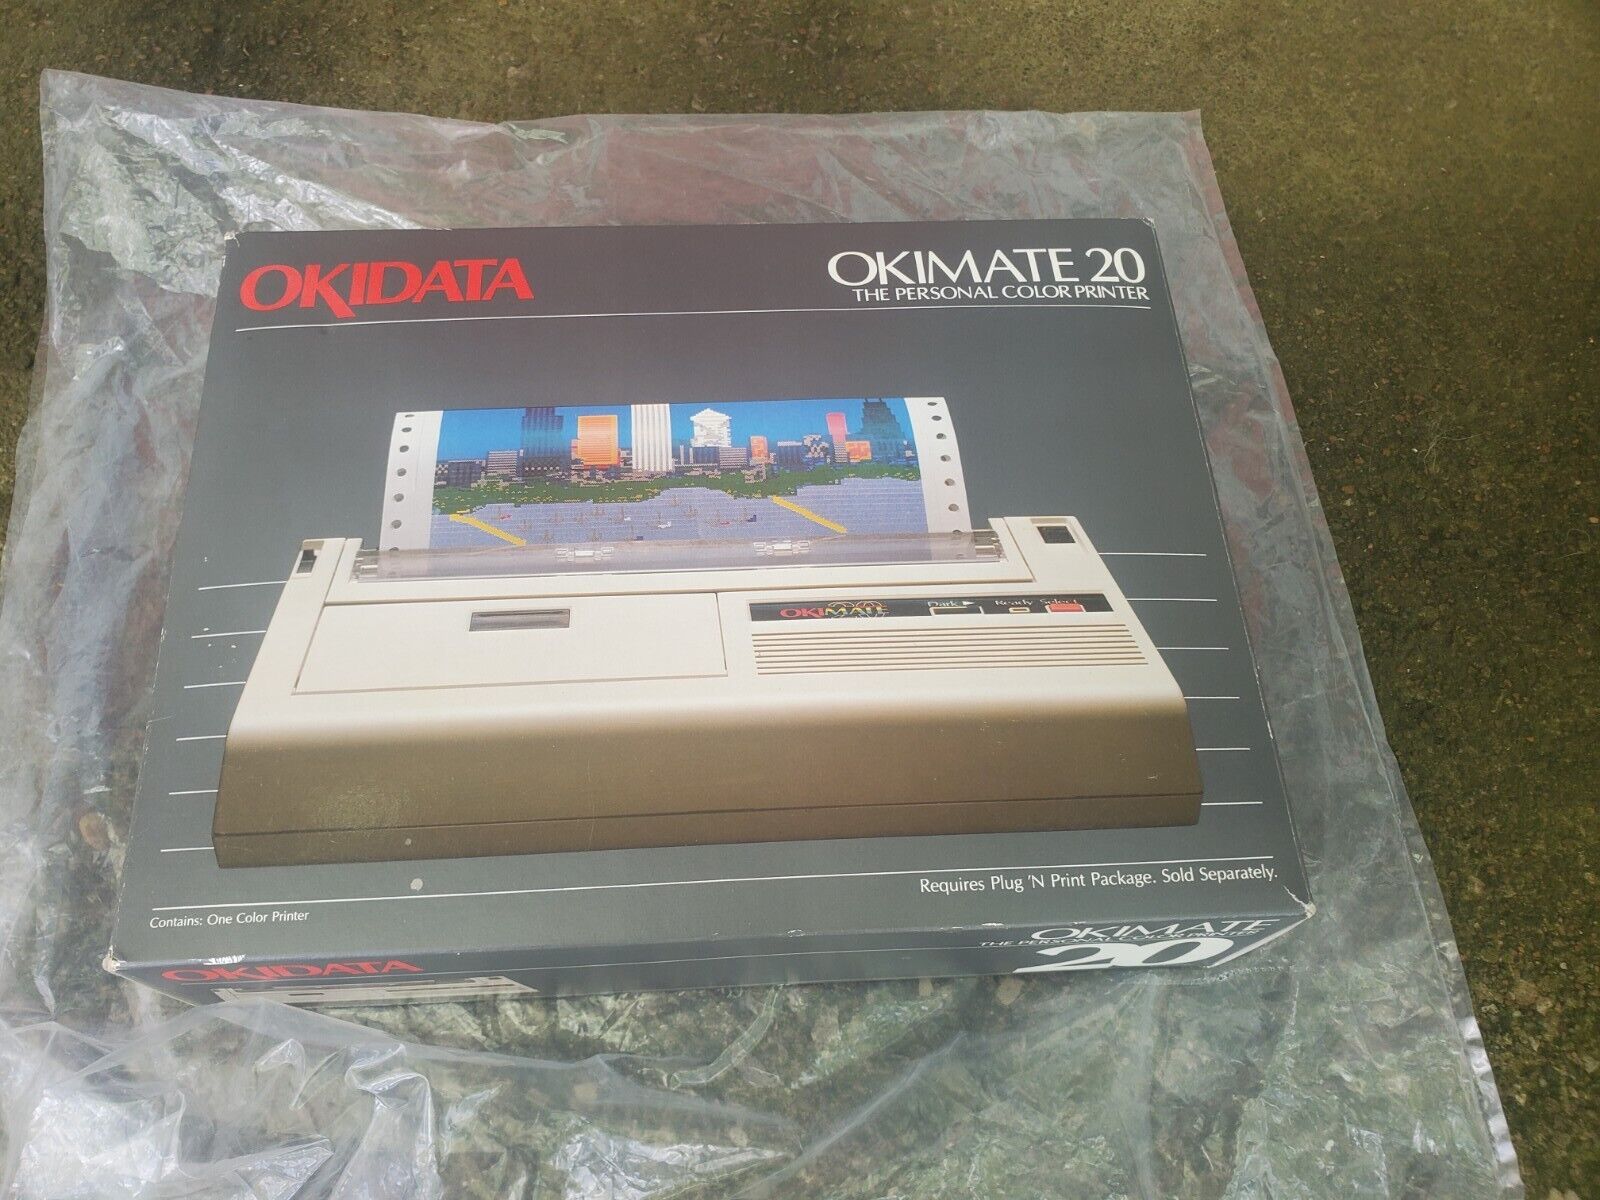 Okidata Okimate 20 Color Printer 1985 Model# EN3211 Powers On w/Original Box 